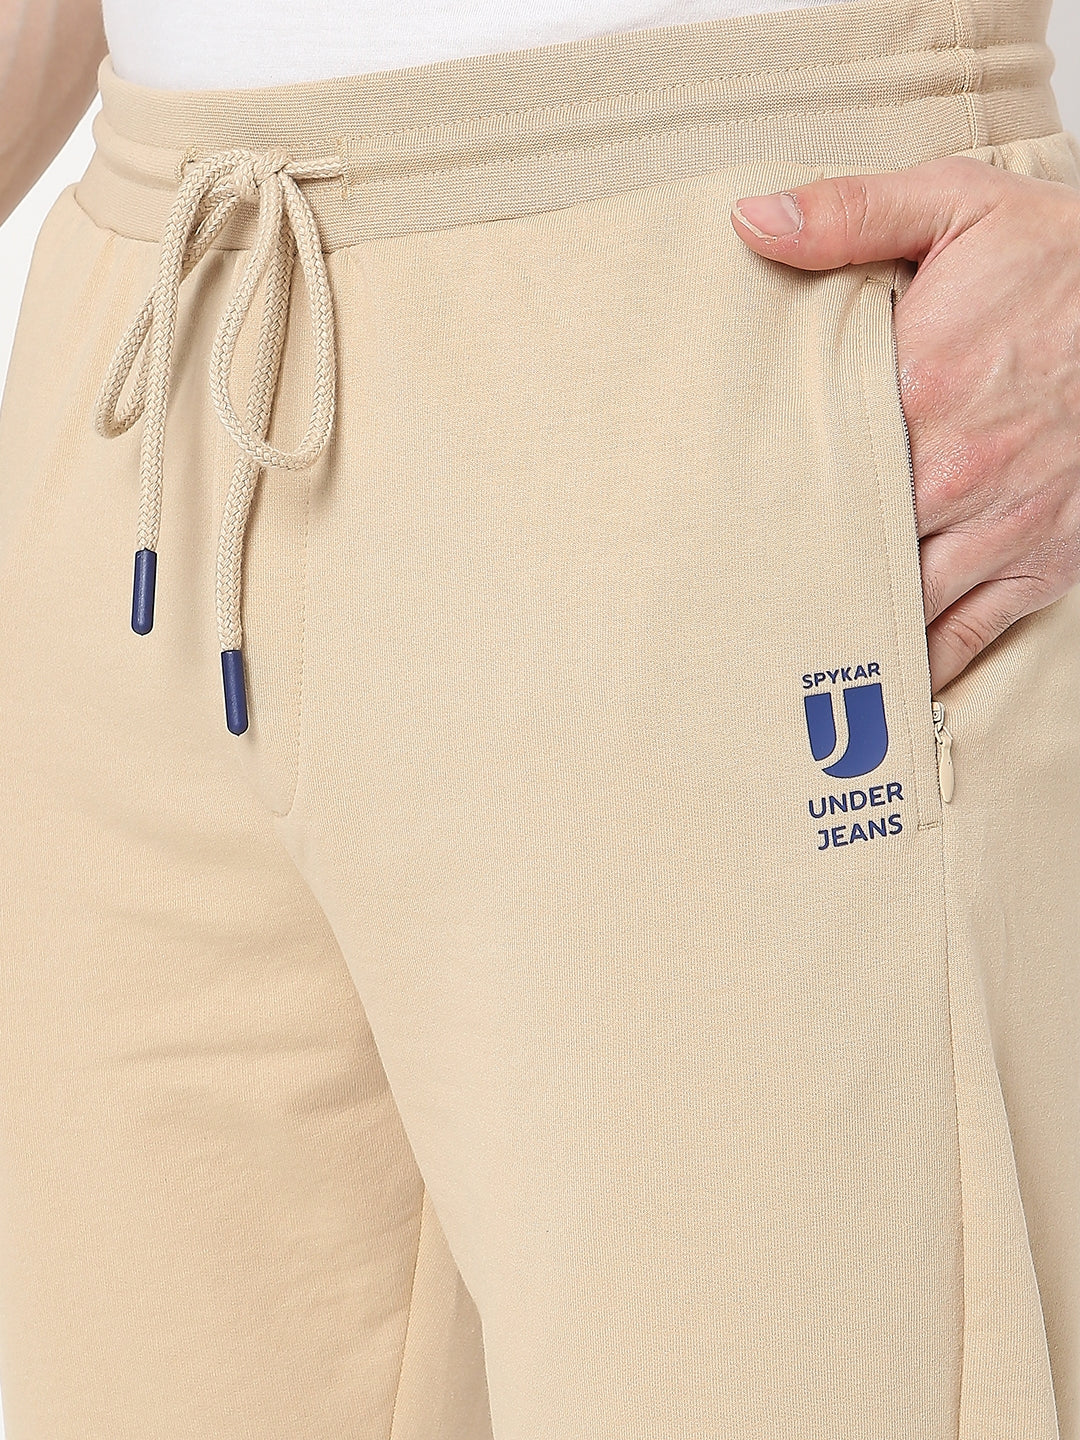 Underjeans by Spykar Men Premium Knitted Beige Track Pant